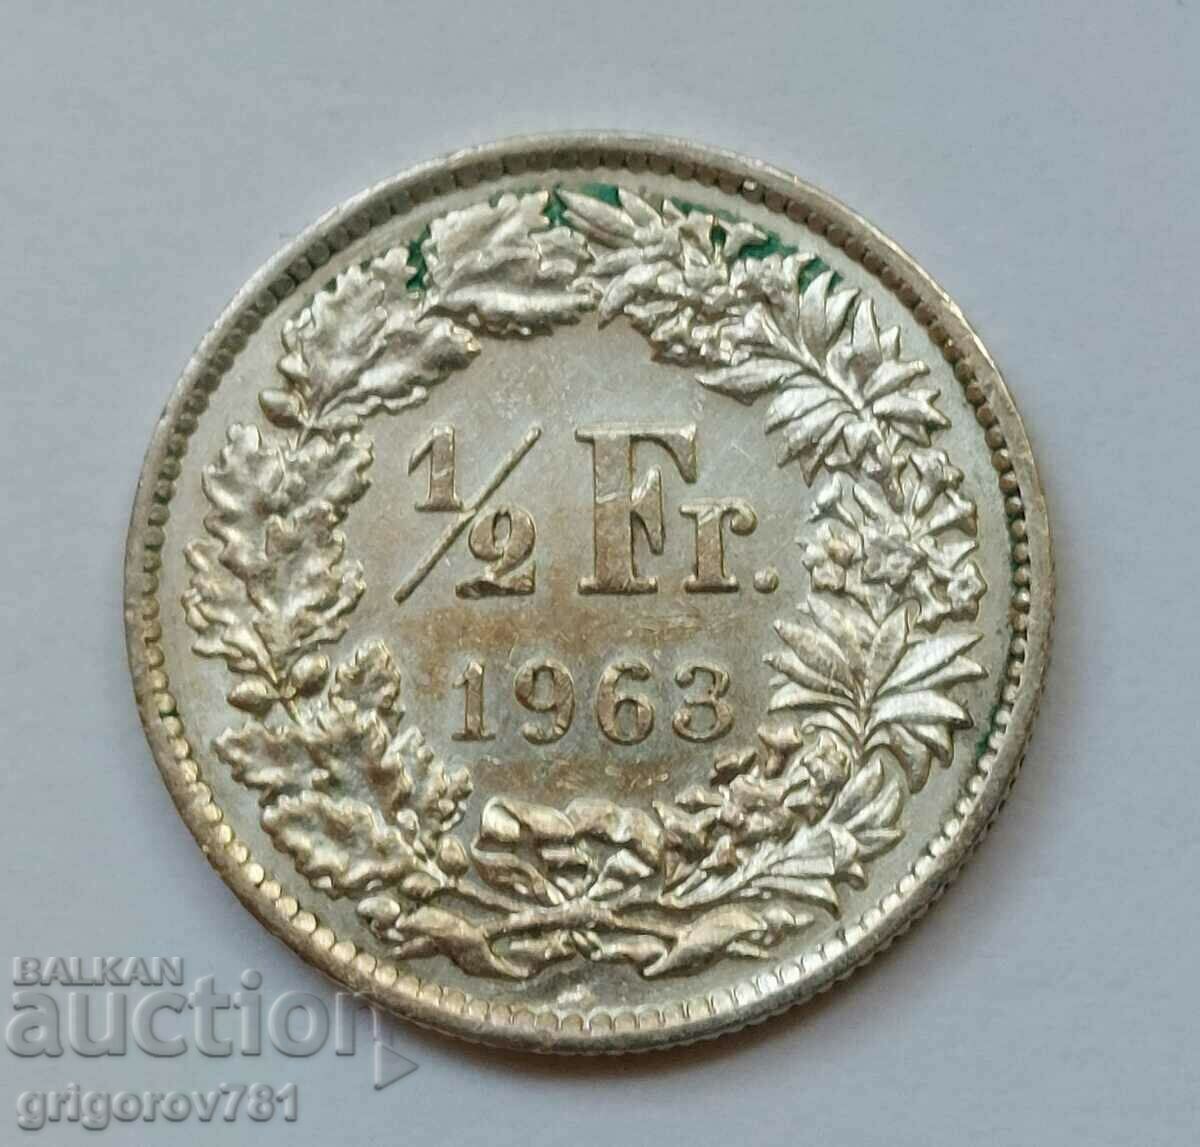 1/2 franc argint Elveția 1963 - monedă de argint